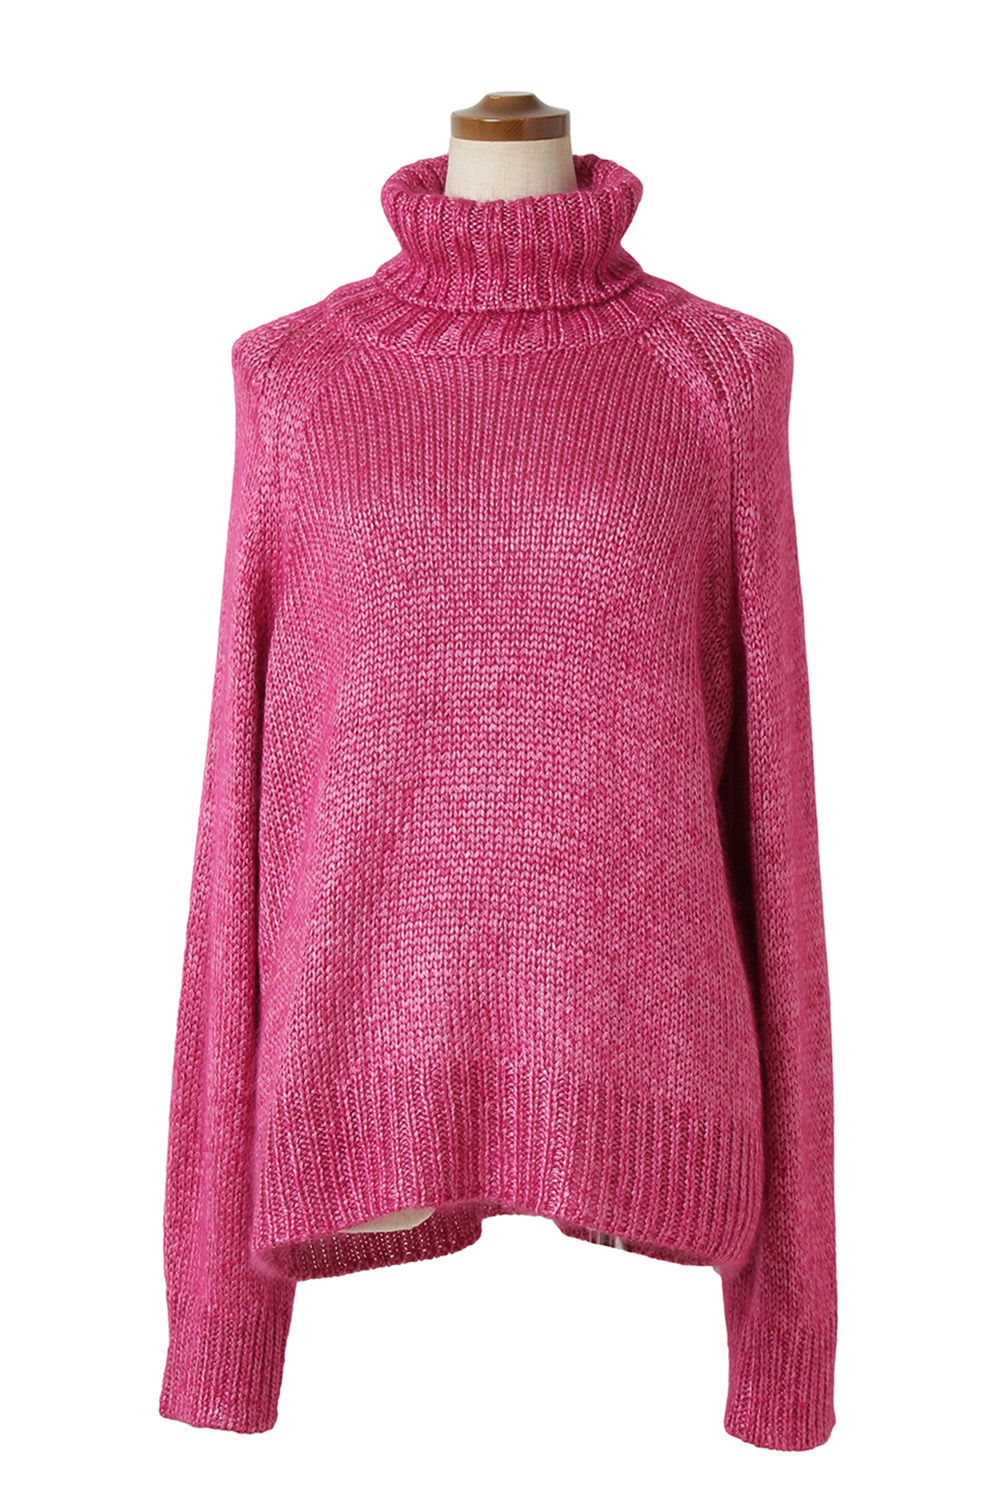 Silk mohair cord knit プルオーバー 詳細画像 ピンク